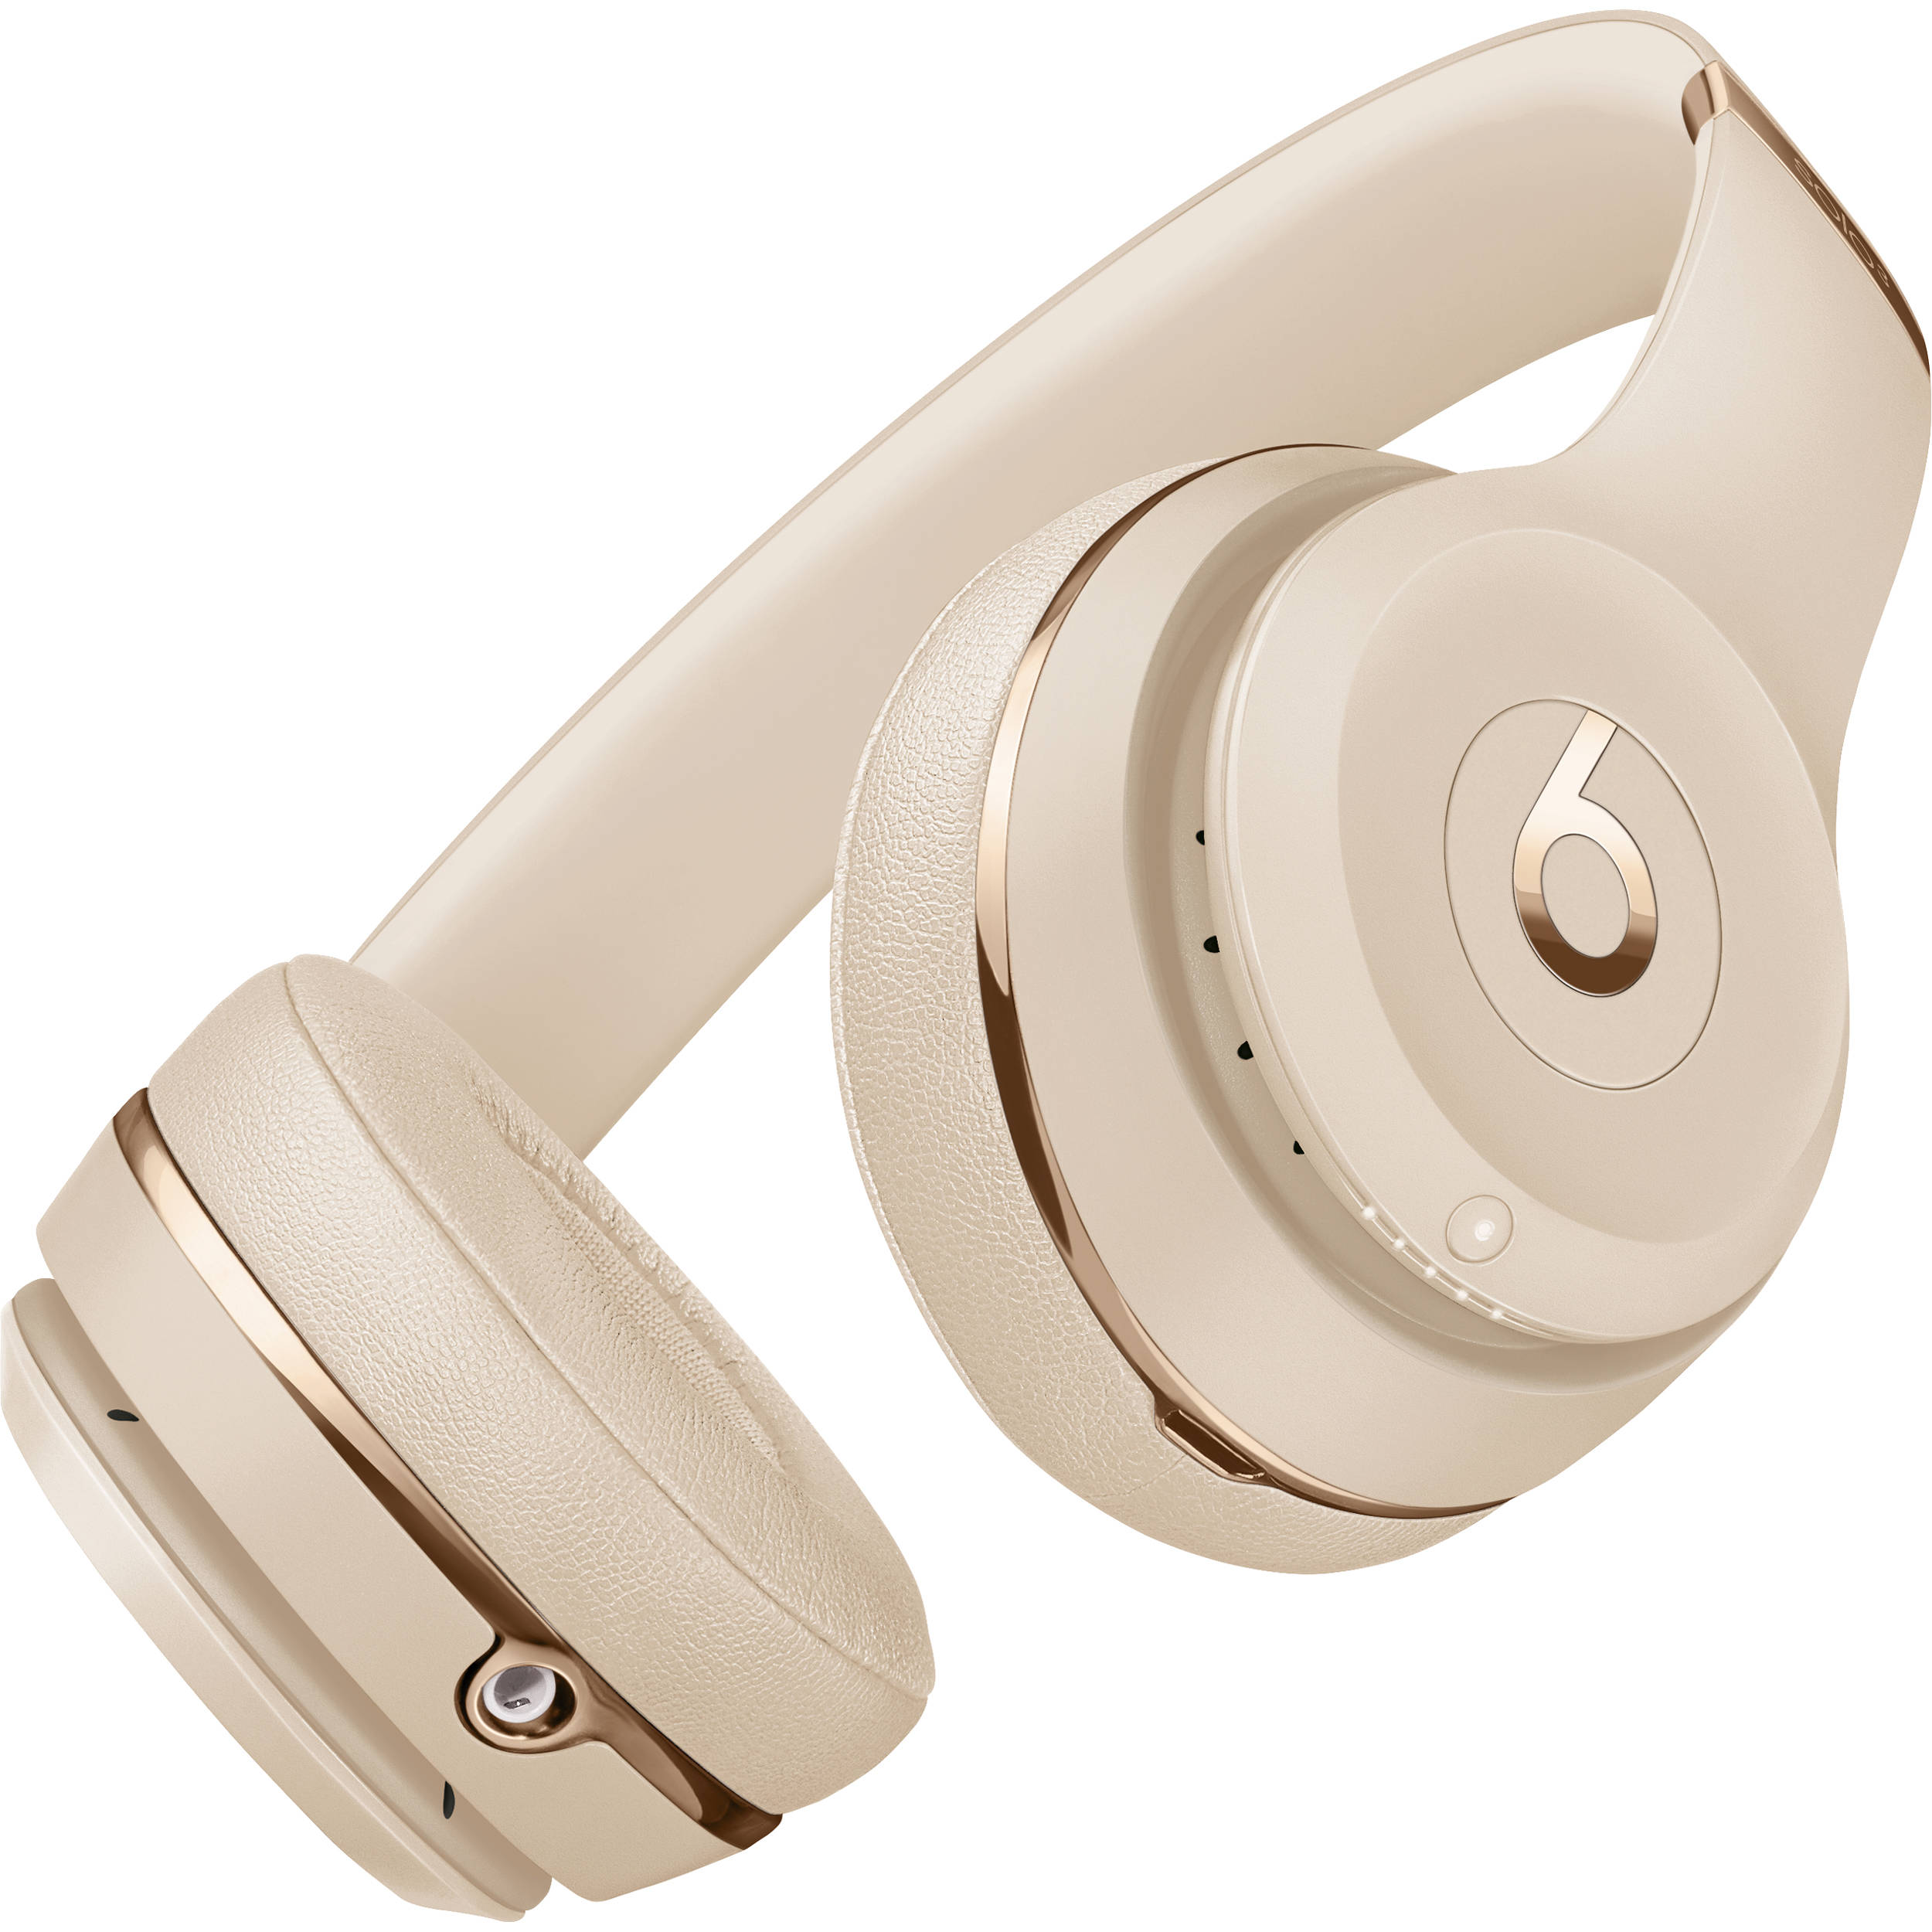 gold beats solo 3 wireless headphones